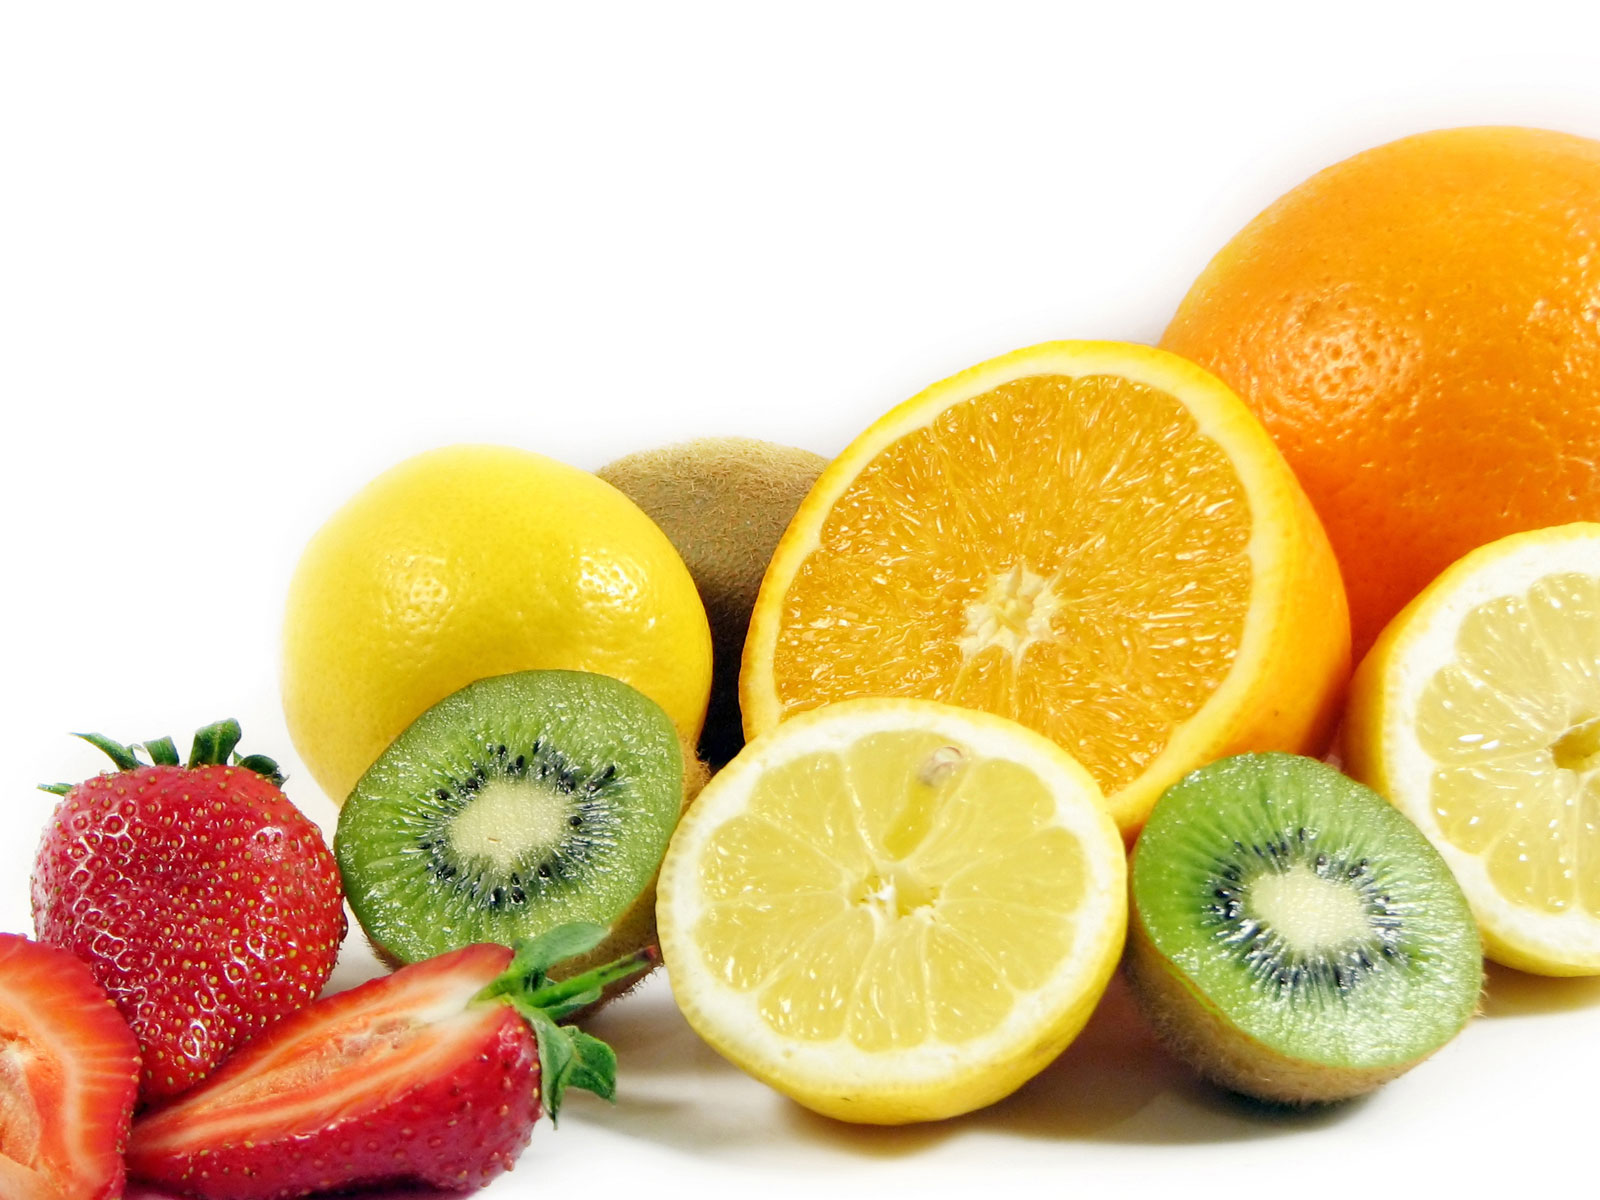  Fresh Fruits Wallpapers Desktop Mix Fruits Mobile 